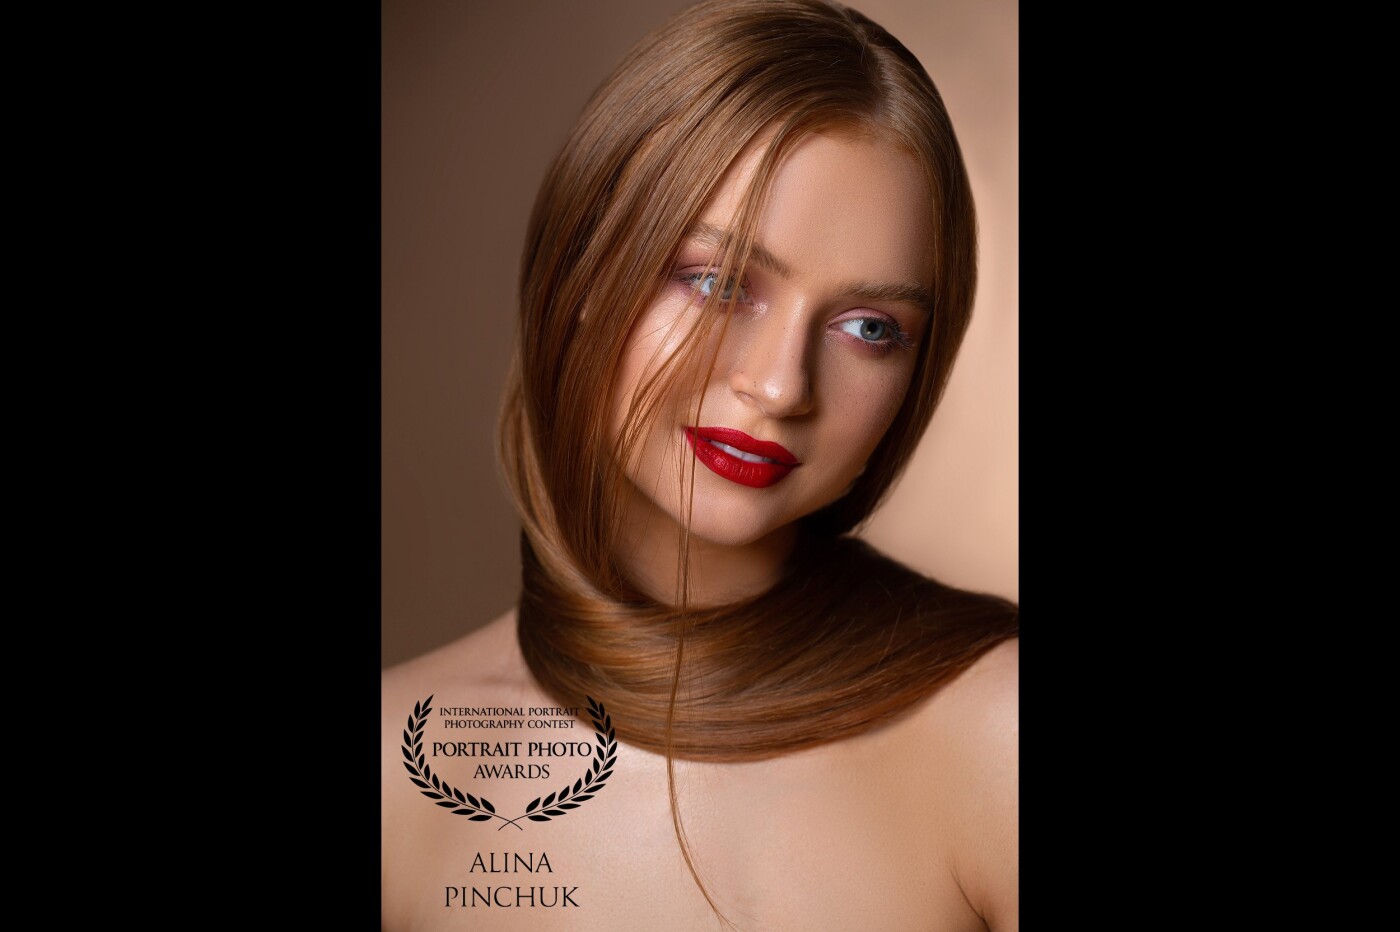 Photographer and Creative Image: Alina Pinchuk @armoniaphotography <br />
Model: Reveka Vysotski @rvysotski<br />
Makeup and Hair: Victoria Perciun @glammed_by_victoria